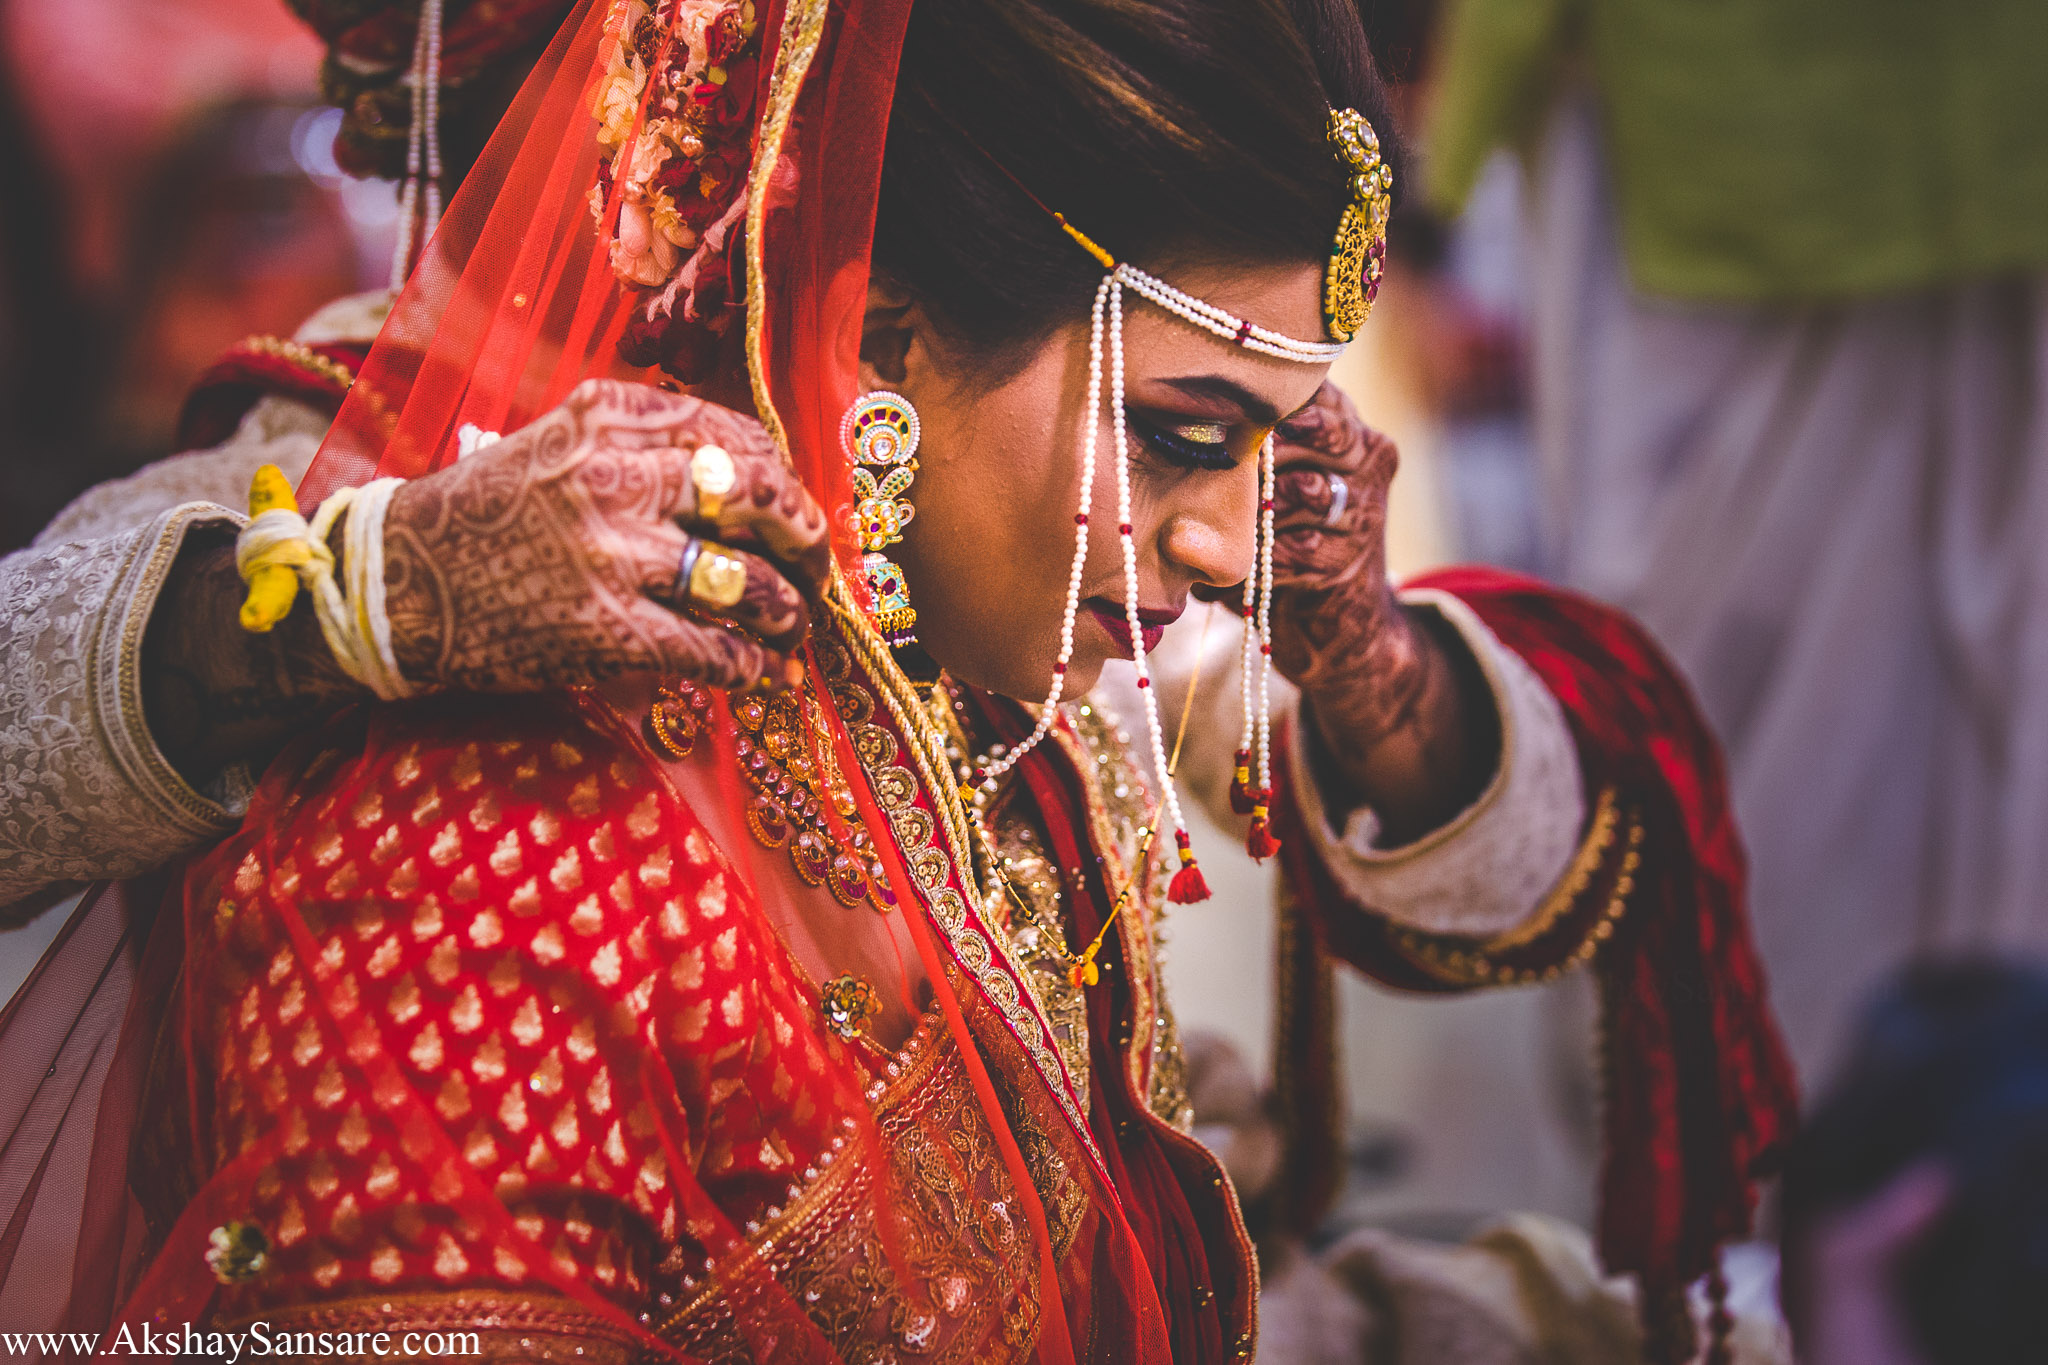 Ajay & Devika Akshay Sansare Photography Best Candid wedding photographer in mumbai india31.jpg